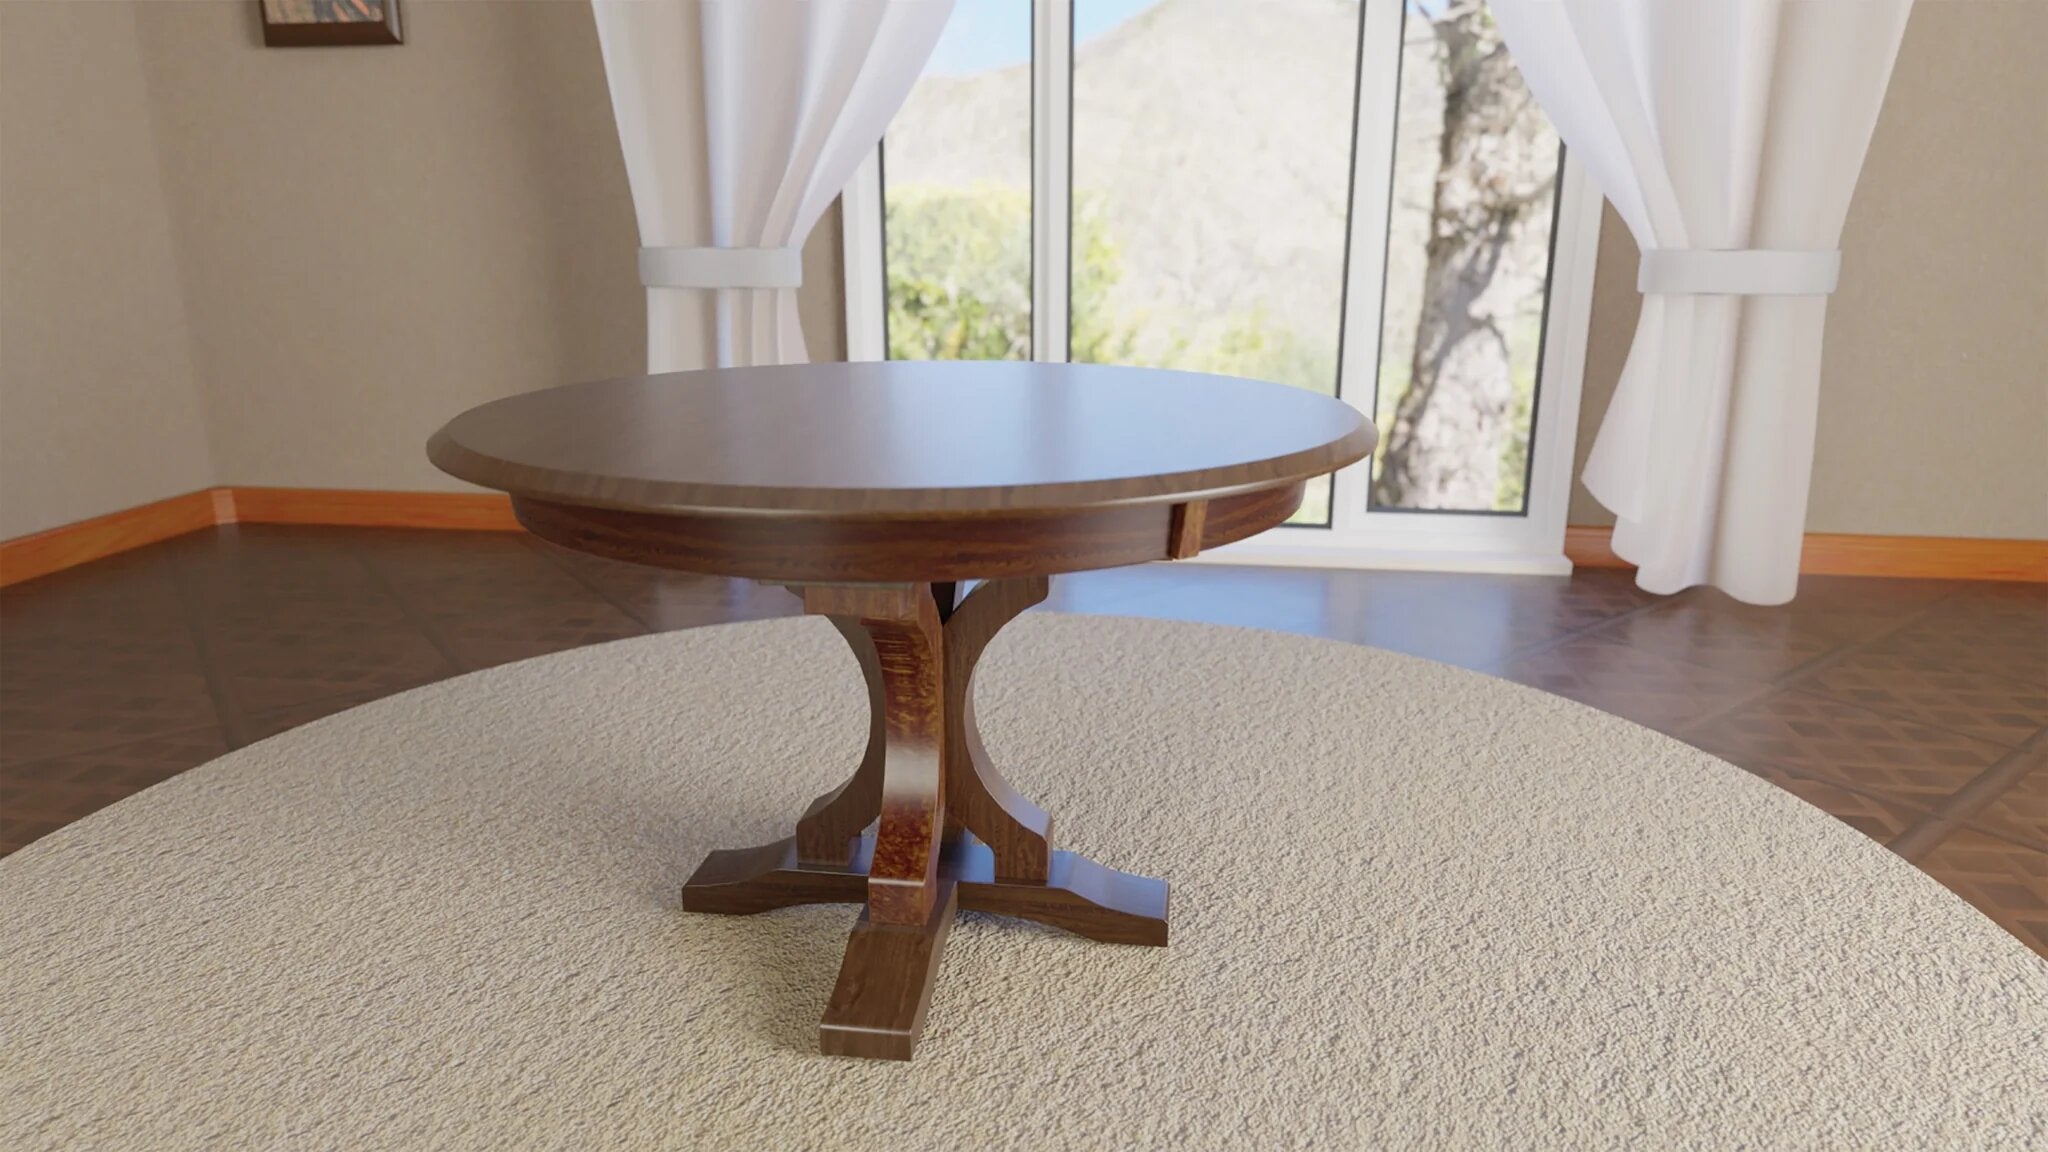 gatlin single pedestal table in room setting